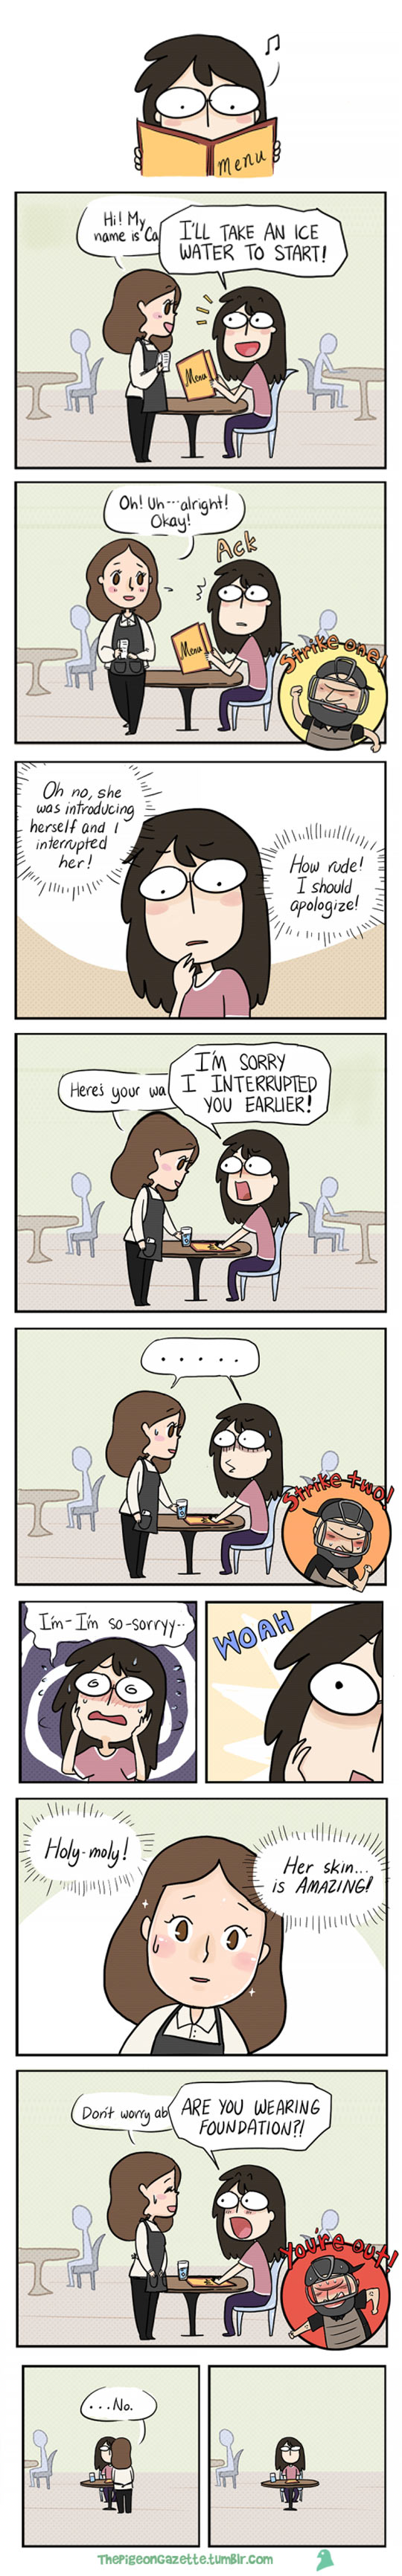 comics-awkward-conversation-waiter